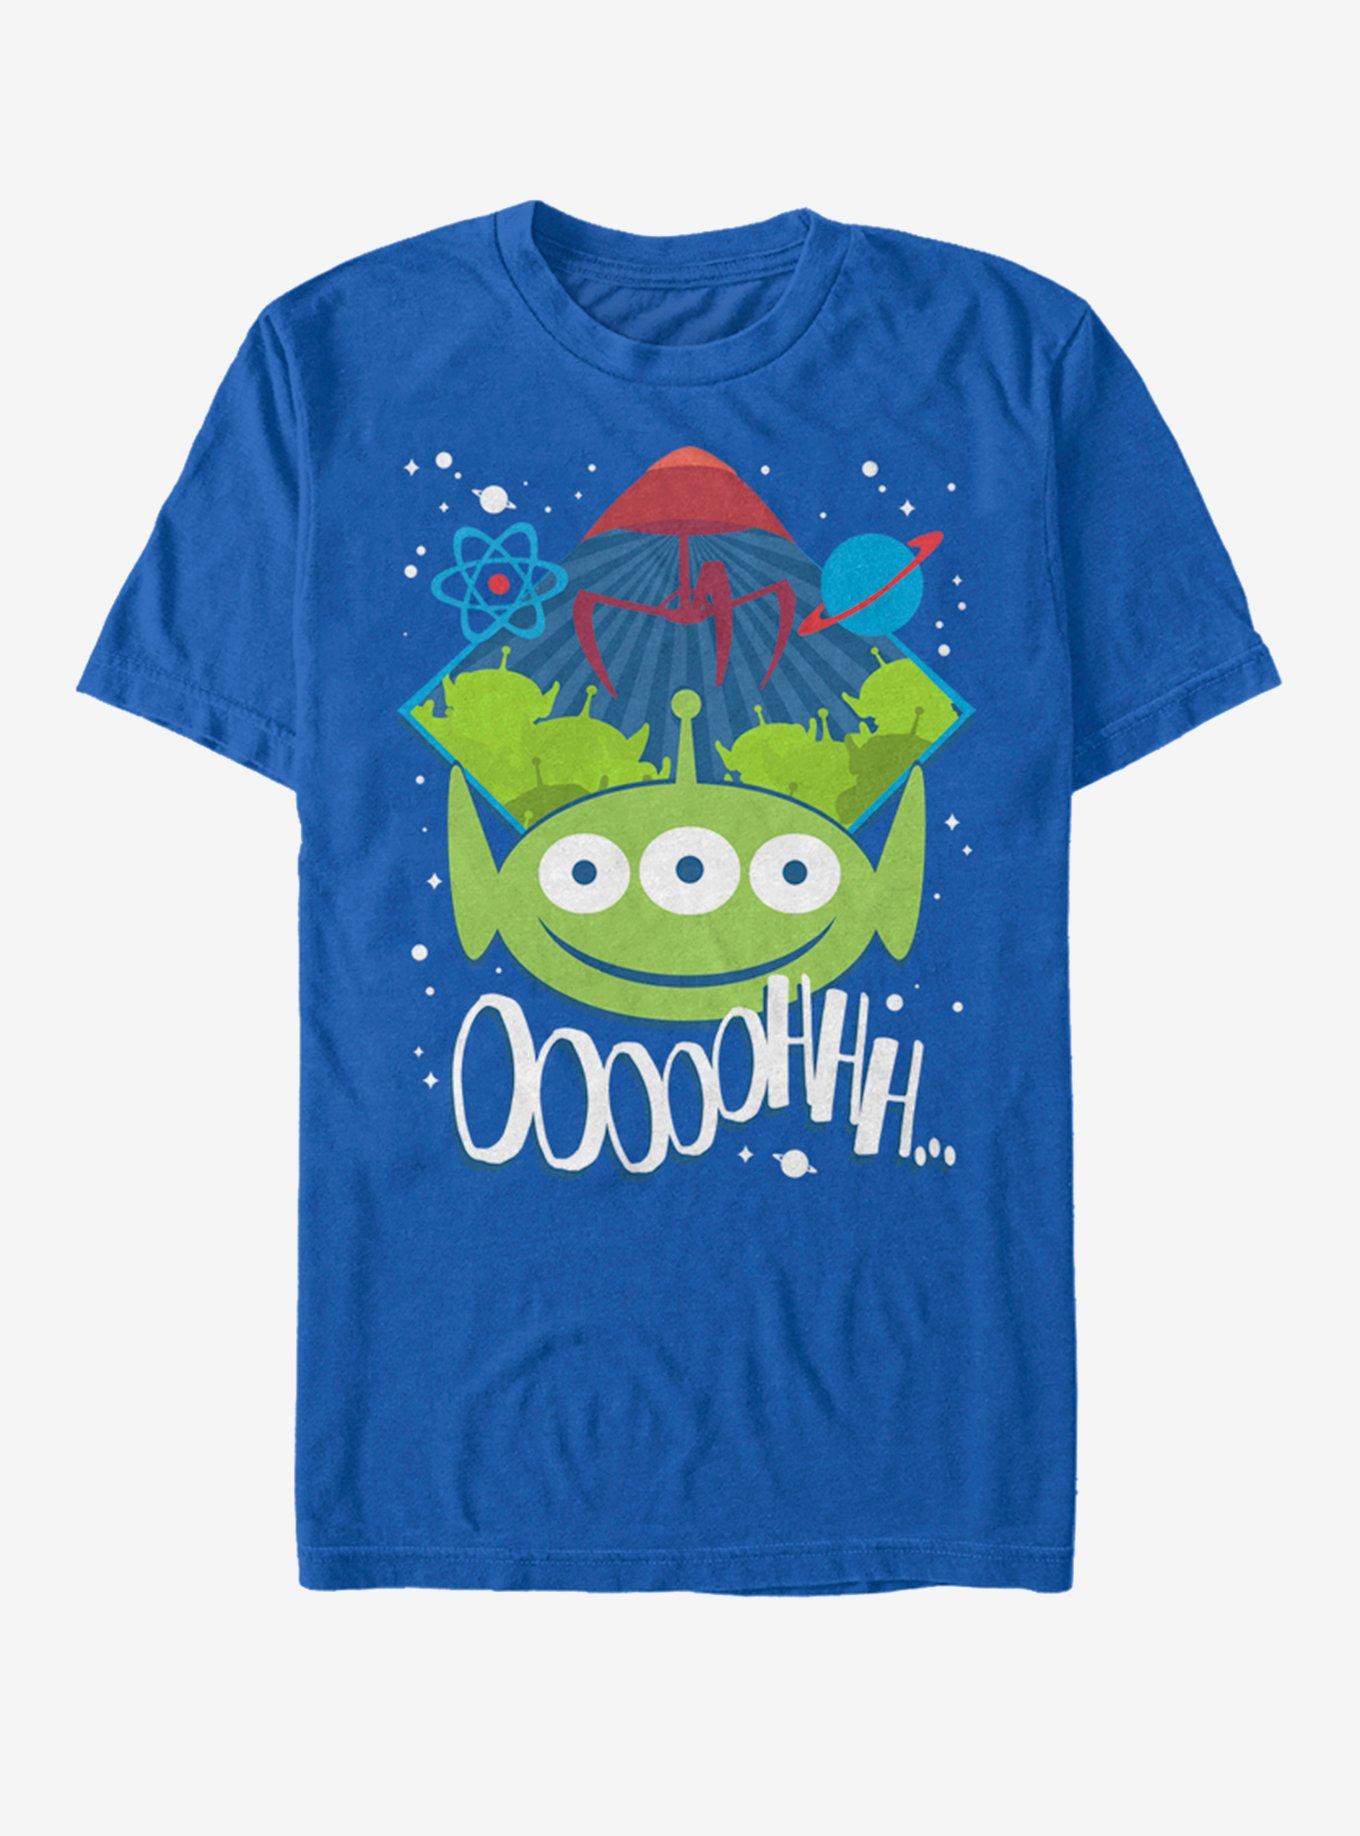 Disney Pixar Toy Story Alien Oooh T-Shirt, ROYAL, hi-res